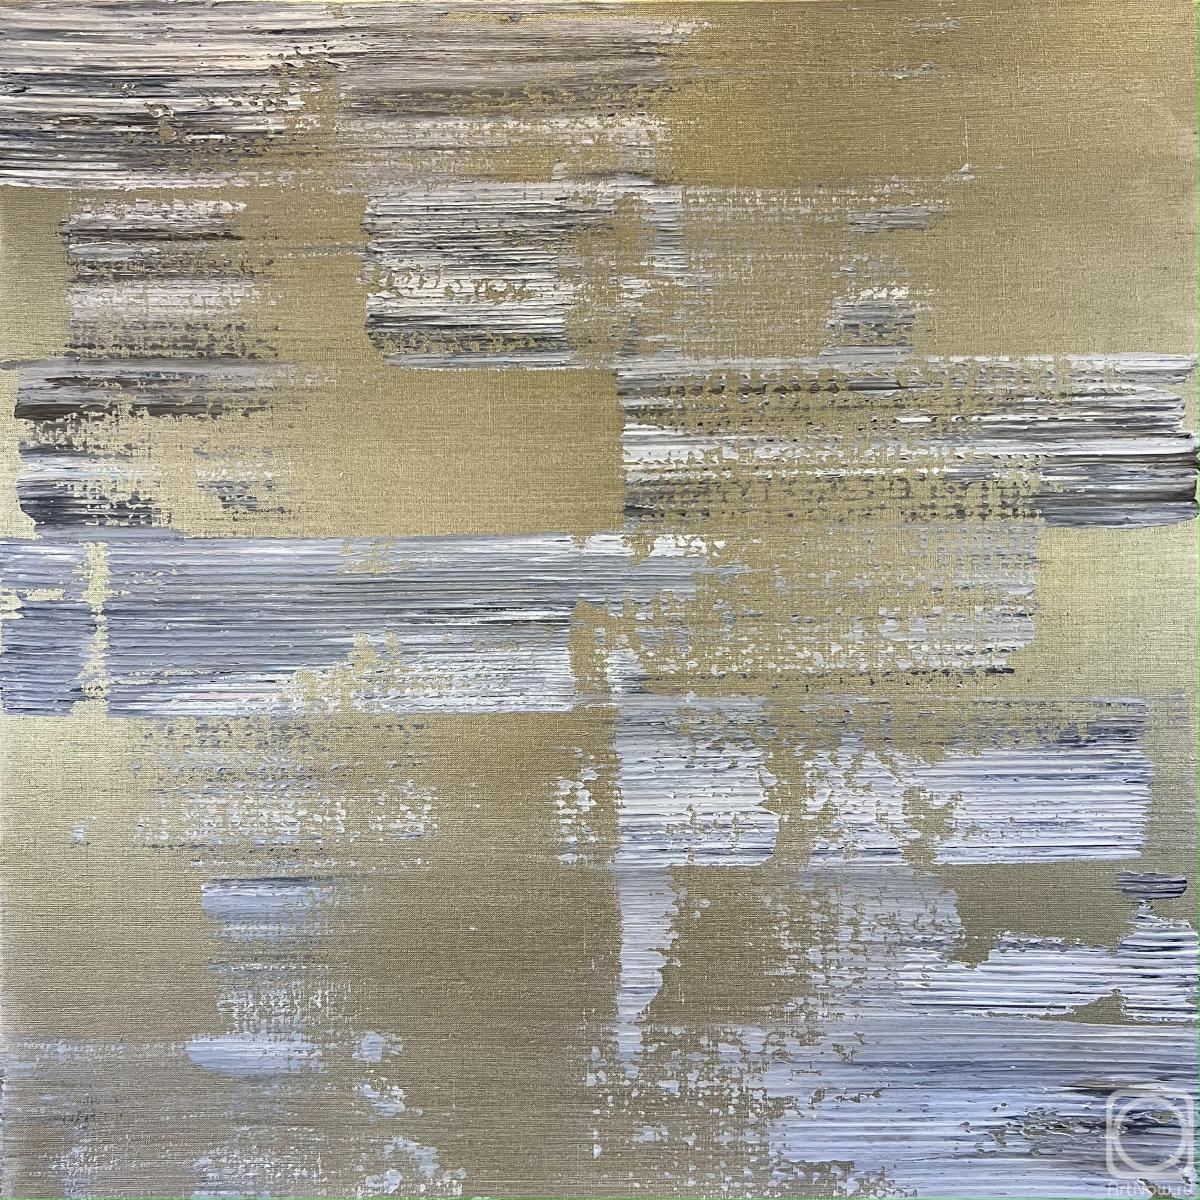 Skromova Marina. Gray Abstraction with Gold